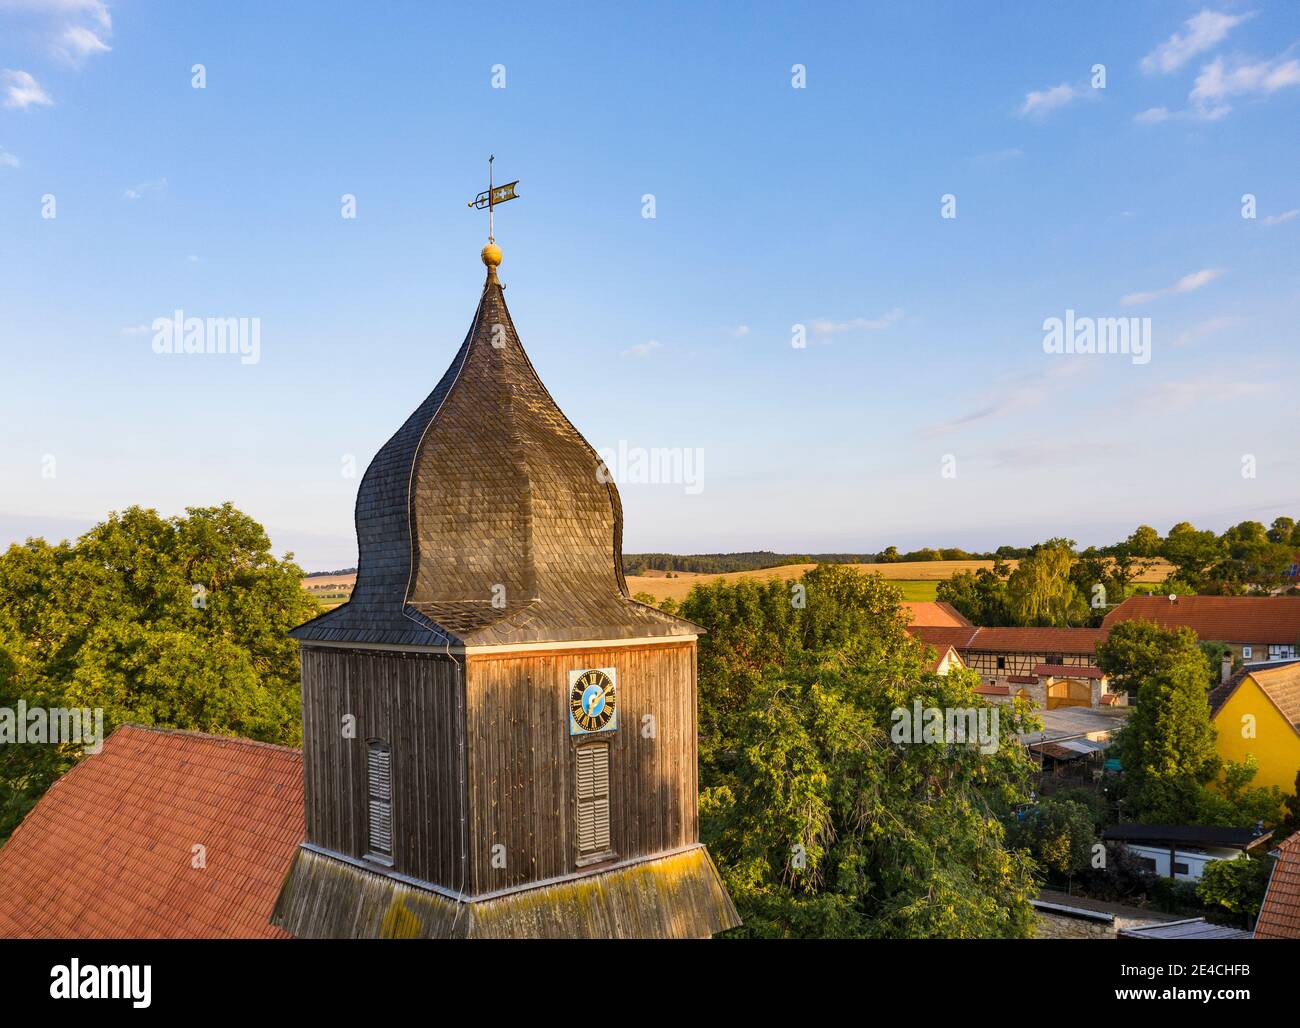 Deutschland, Thüringen, Stadtilm, nahe Winde, Kirchturm, Dorf, Luftbild Stockfoto